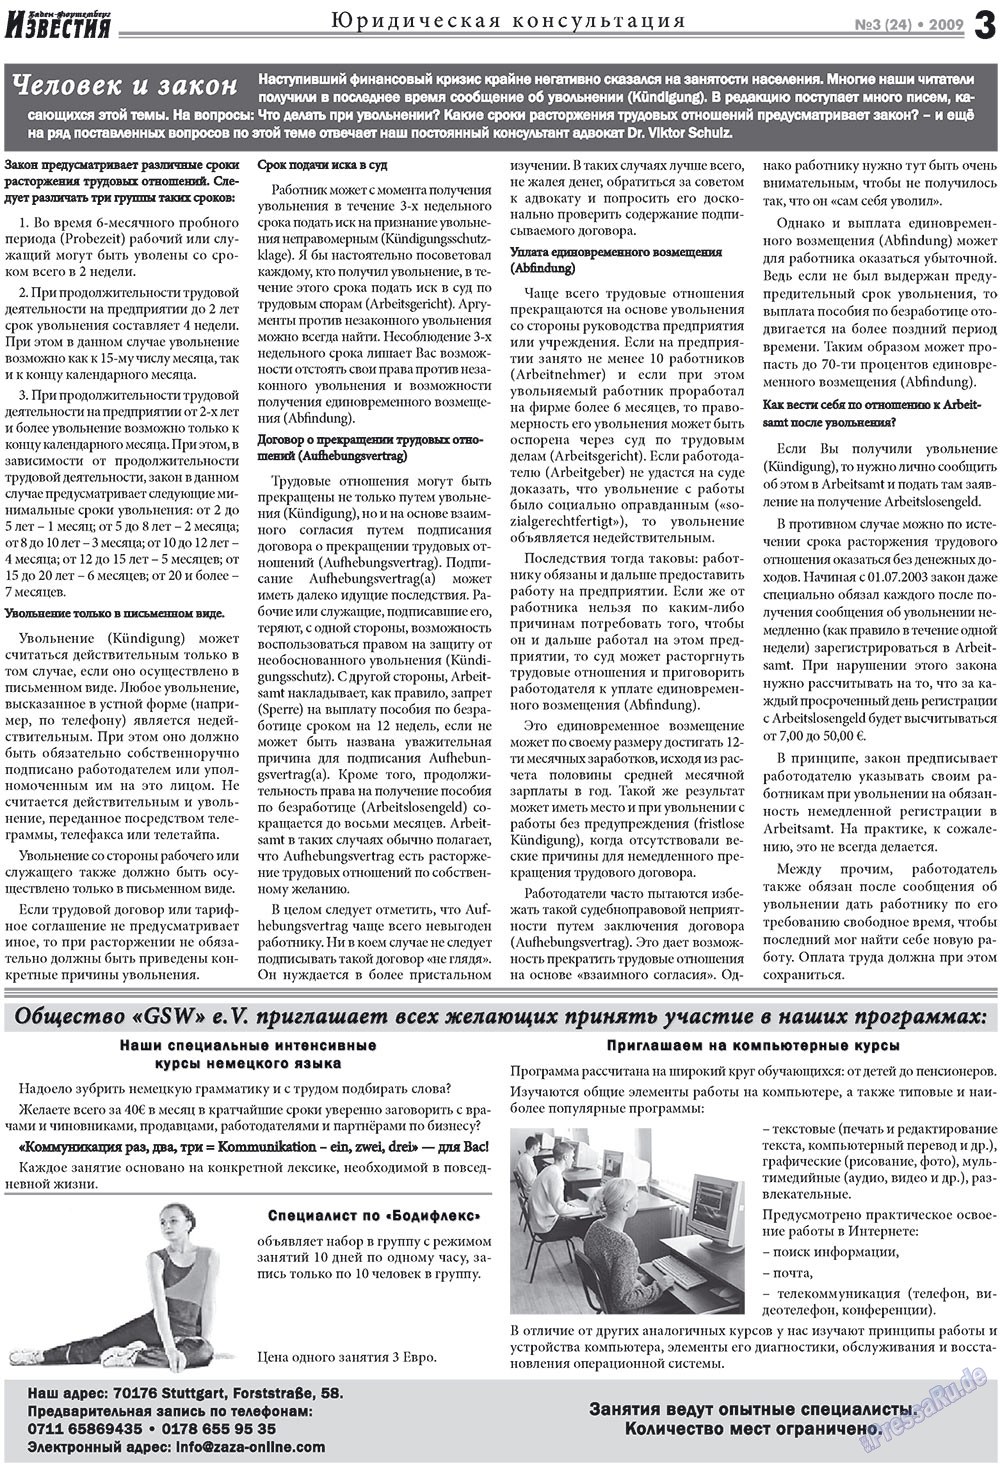 Известия BW (газета). 2009 год, номер 3, стр. 3